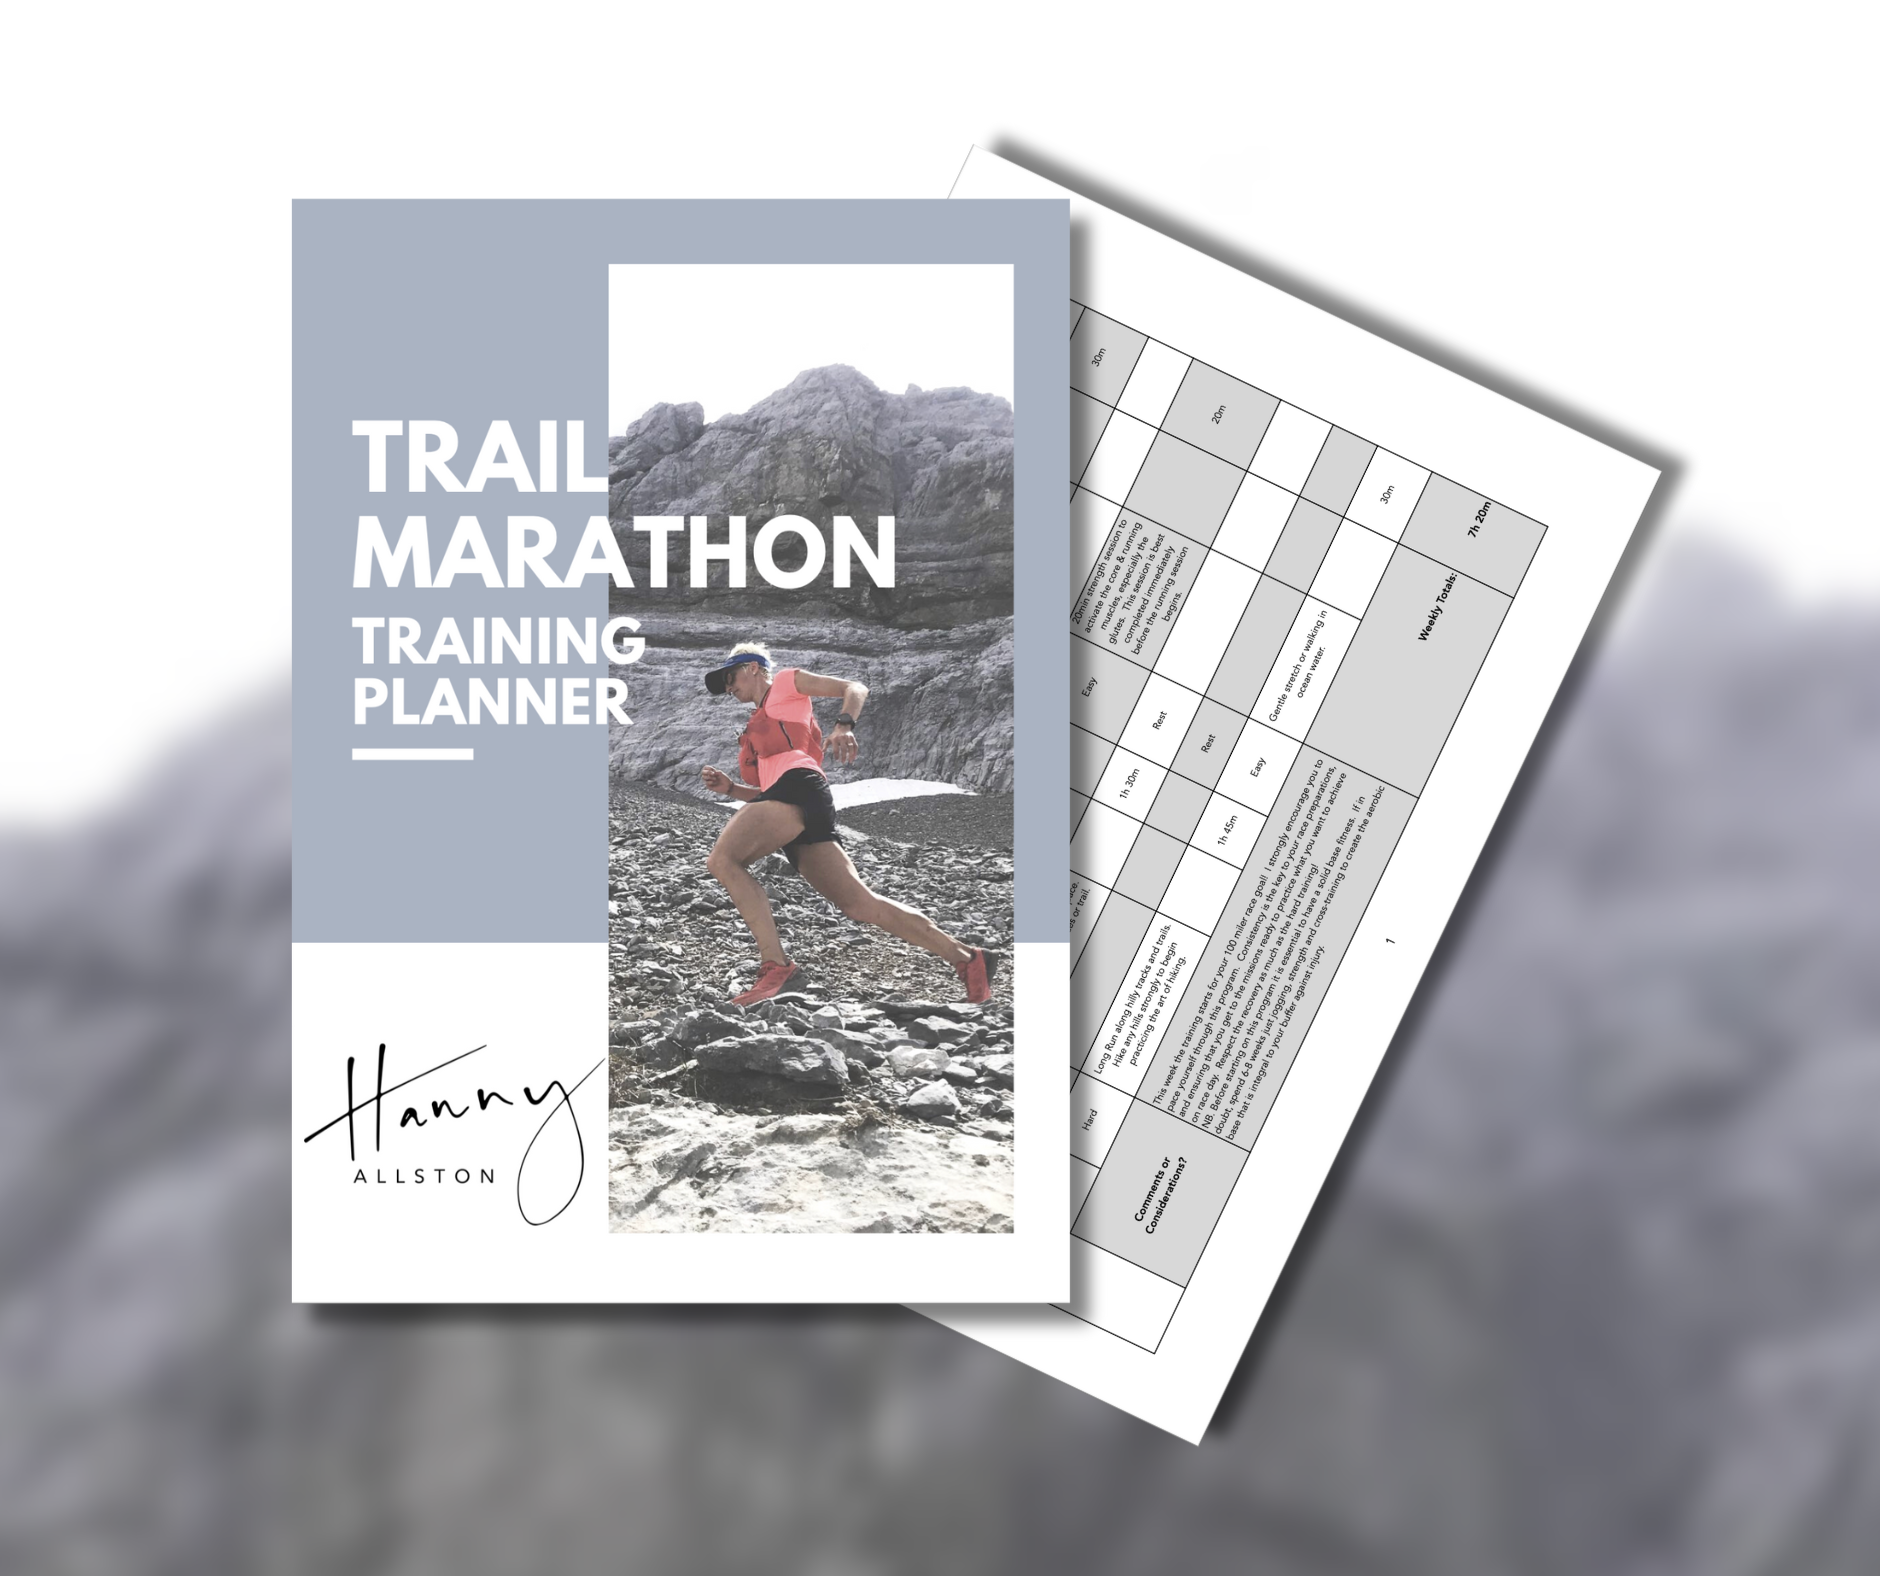 Hanny Allston: Trail Marathon Training Plan